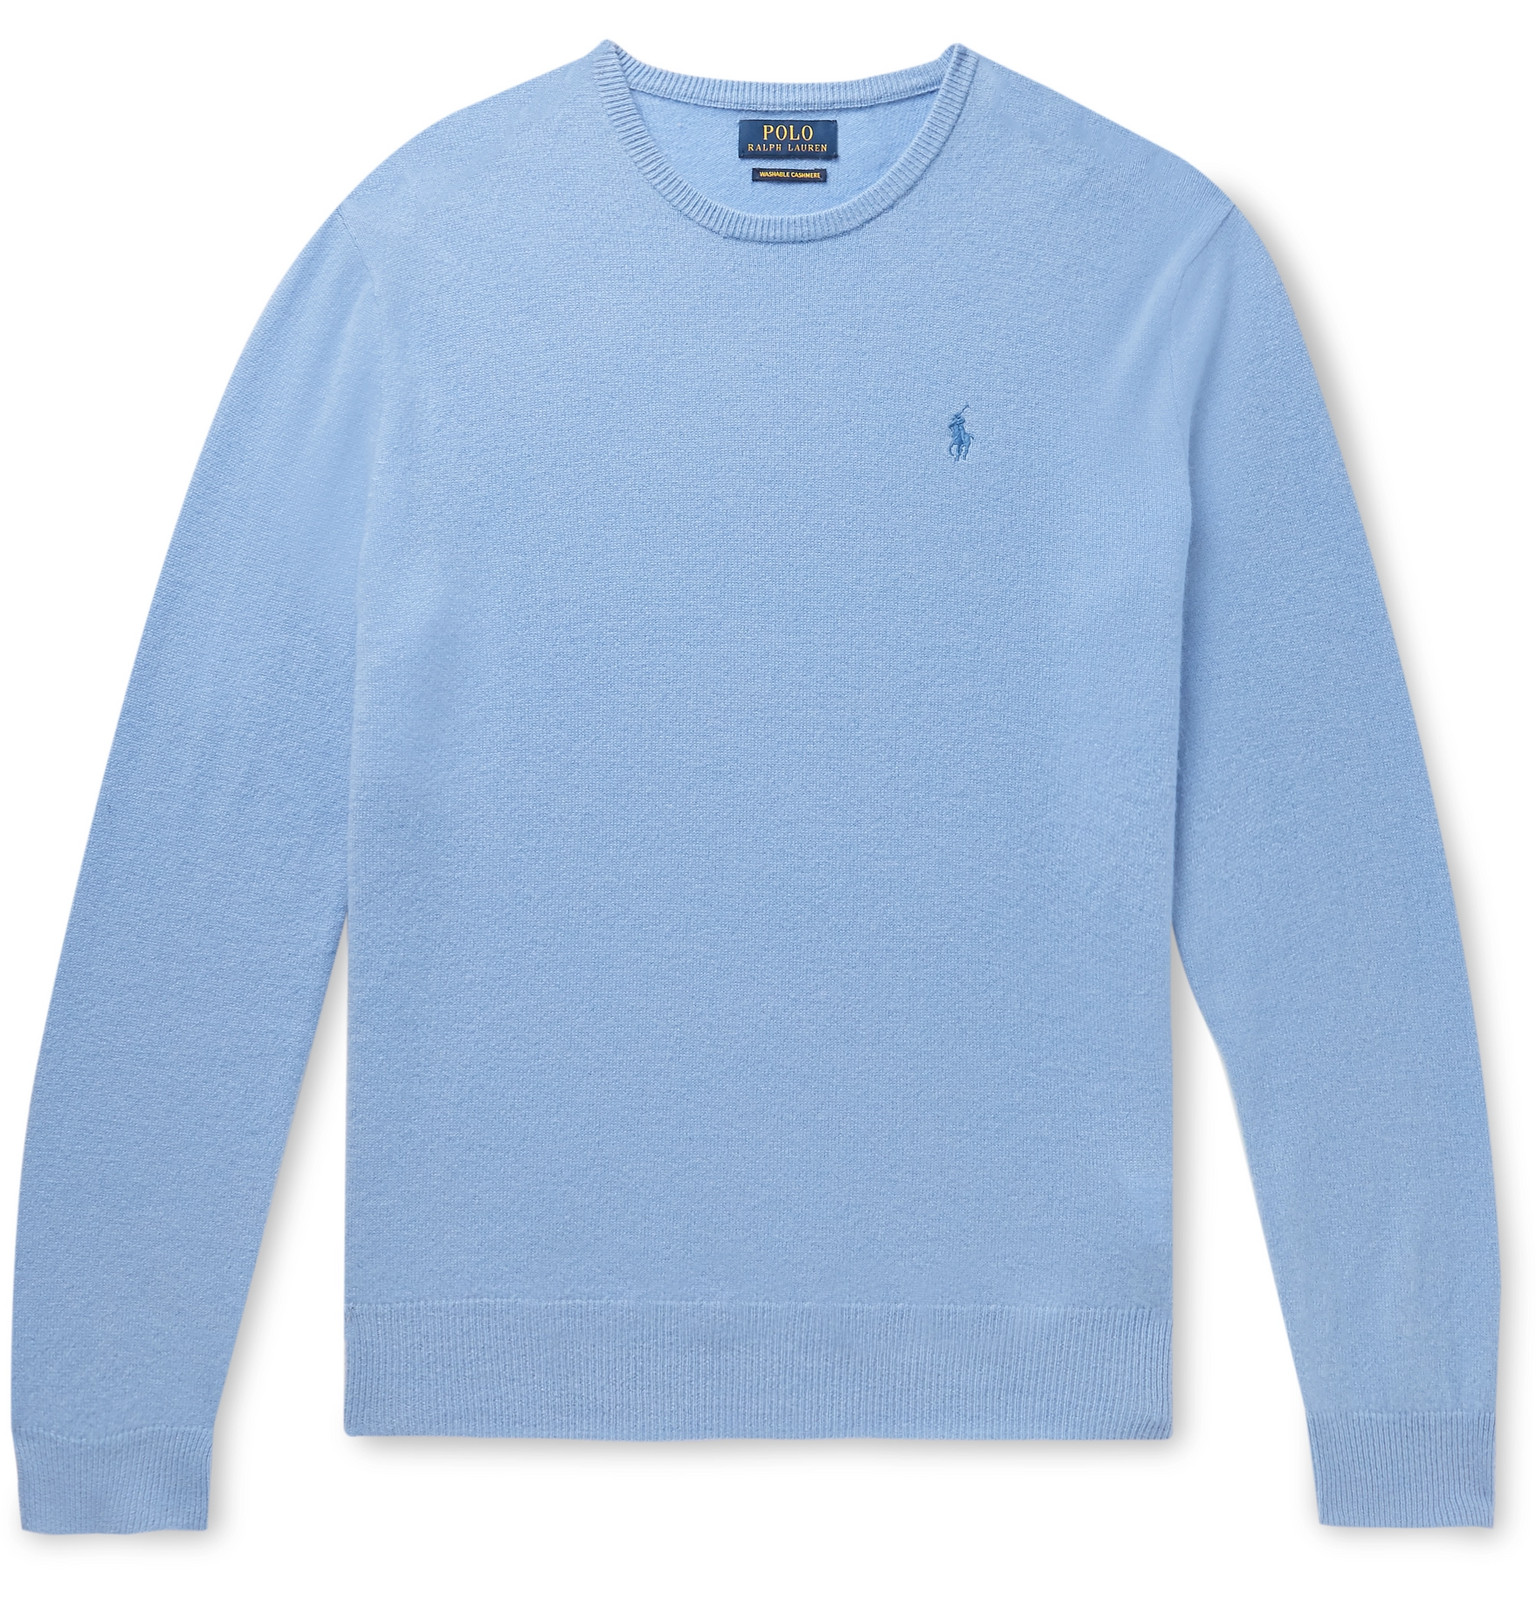 blue polo sweater